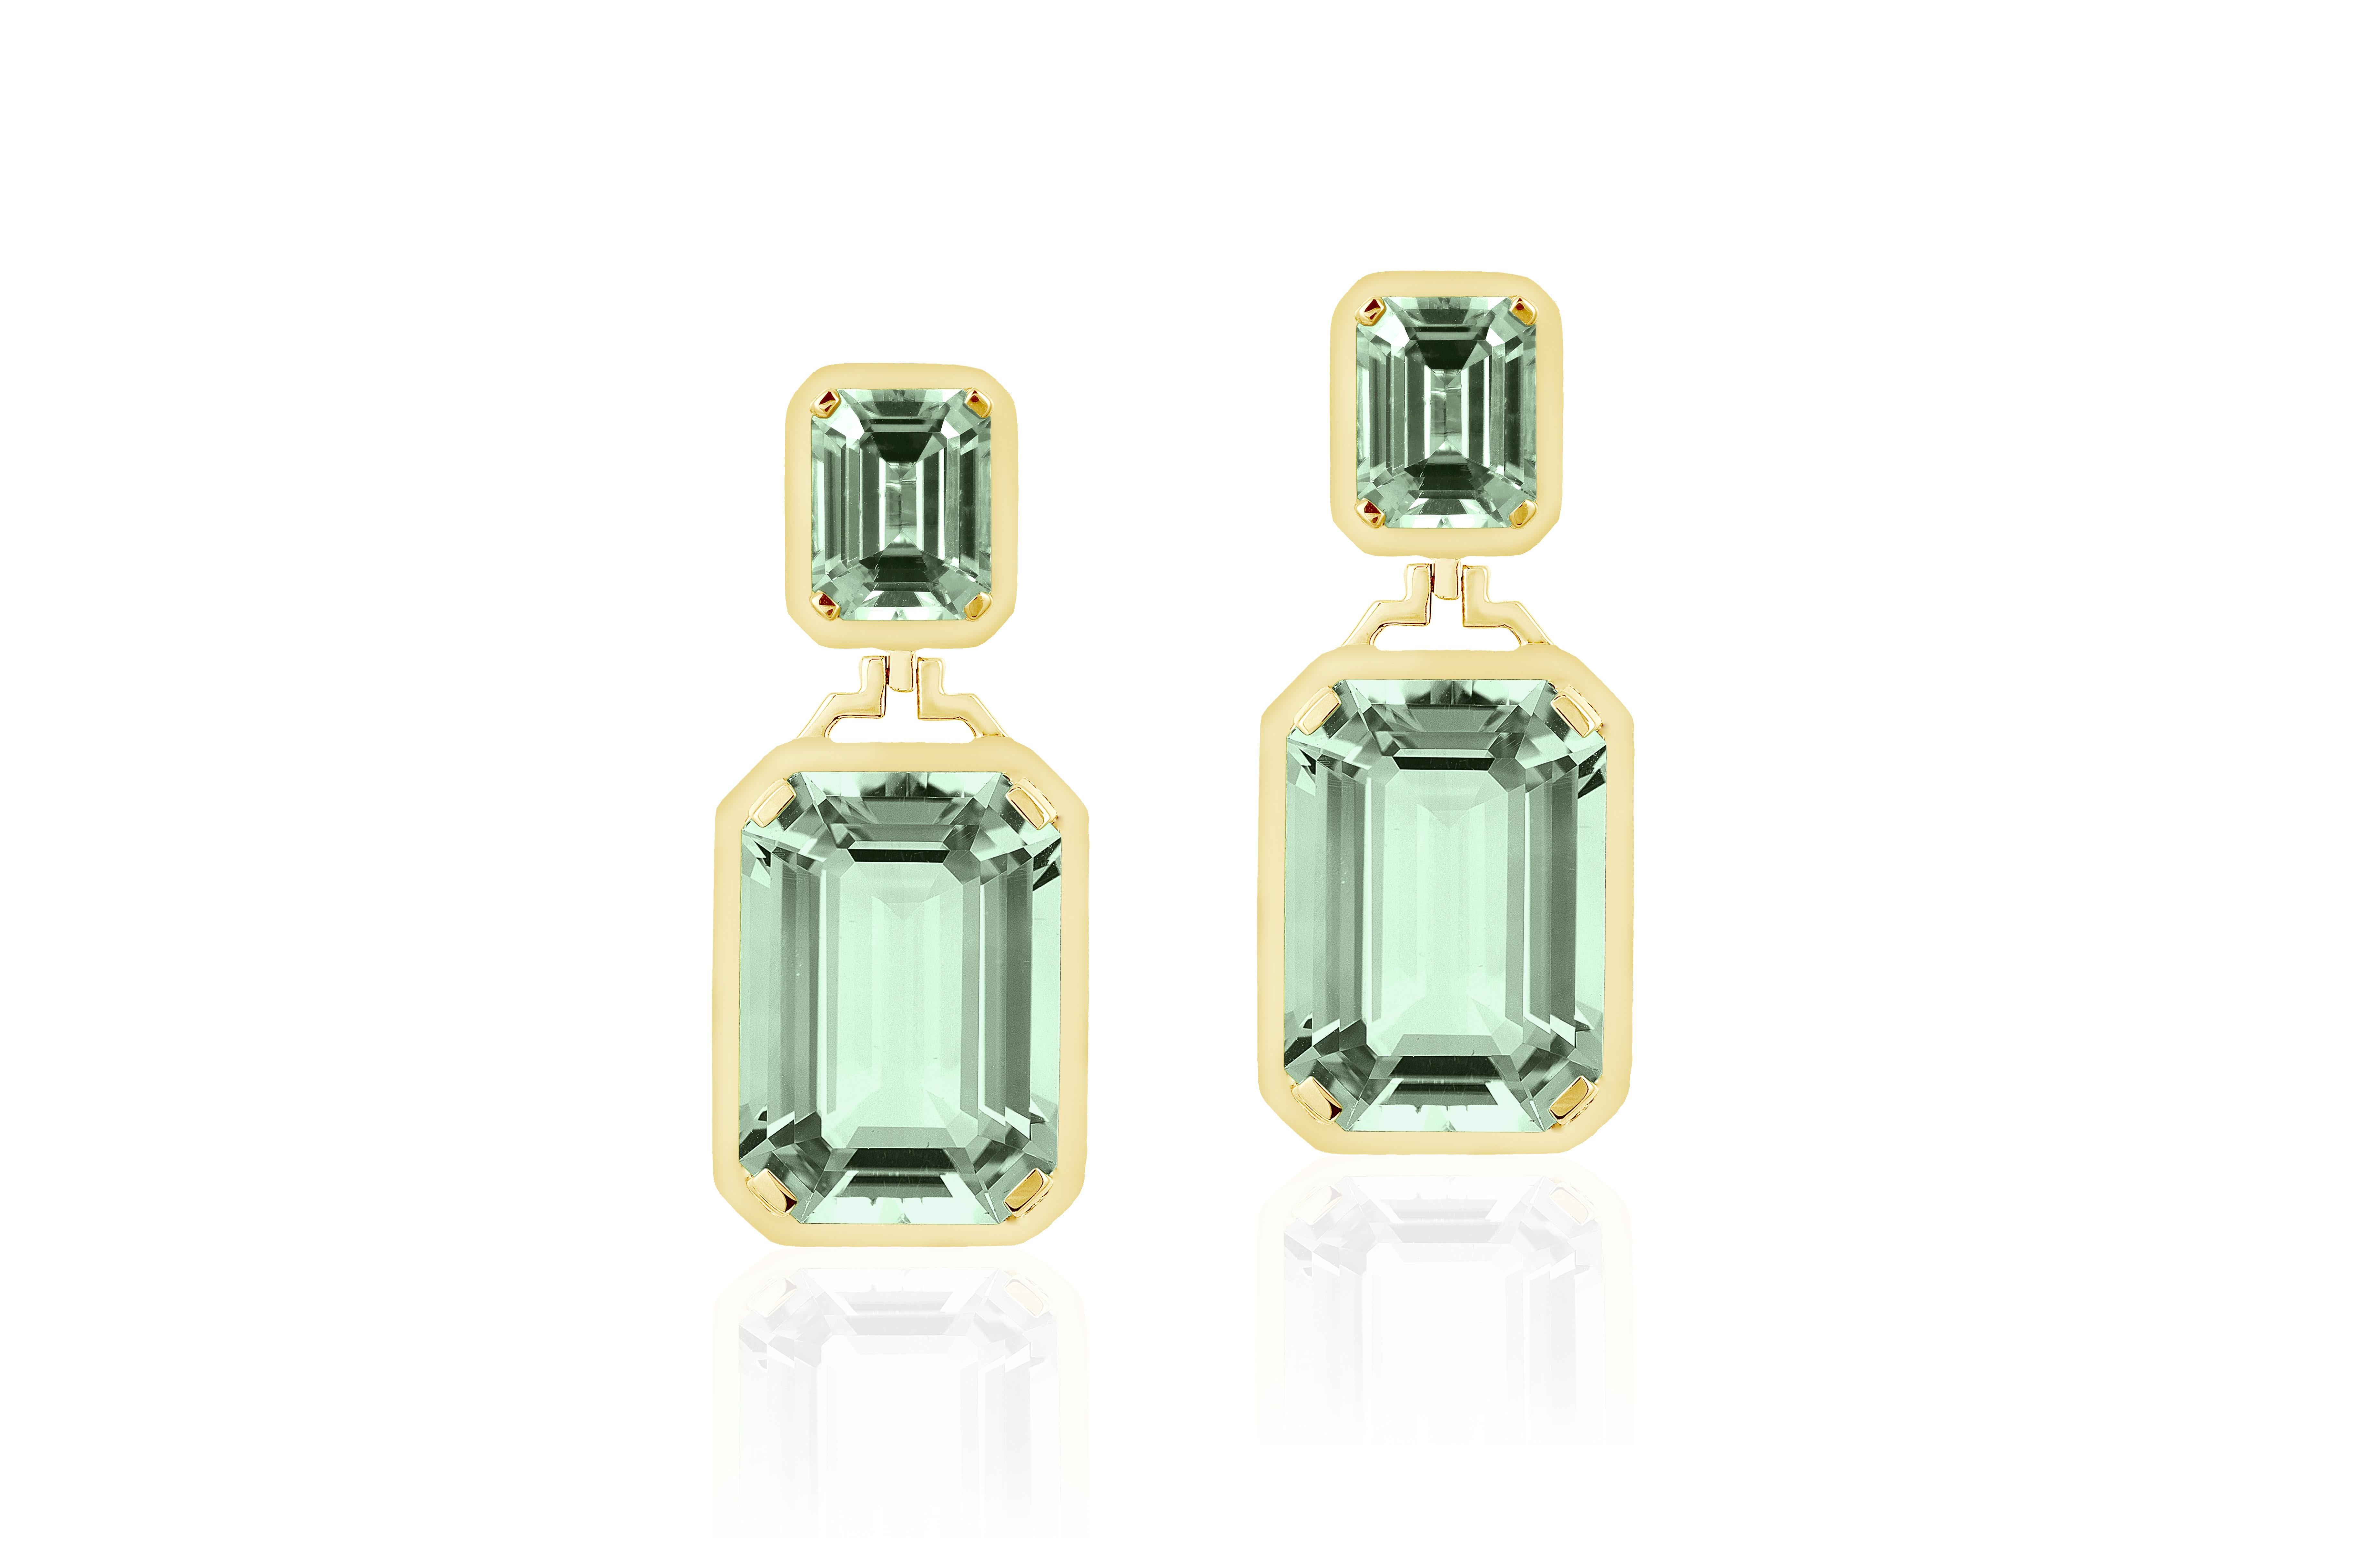 Contemporary Goshwara Double Emerald Cut Prasiolite Long Earrings